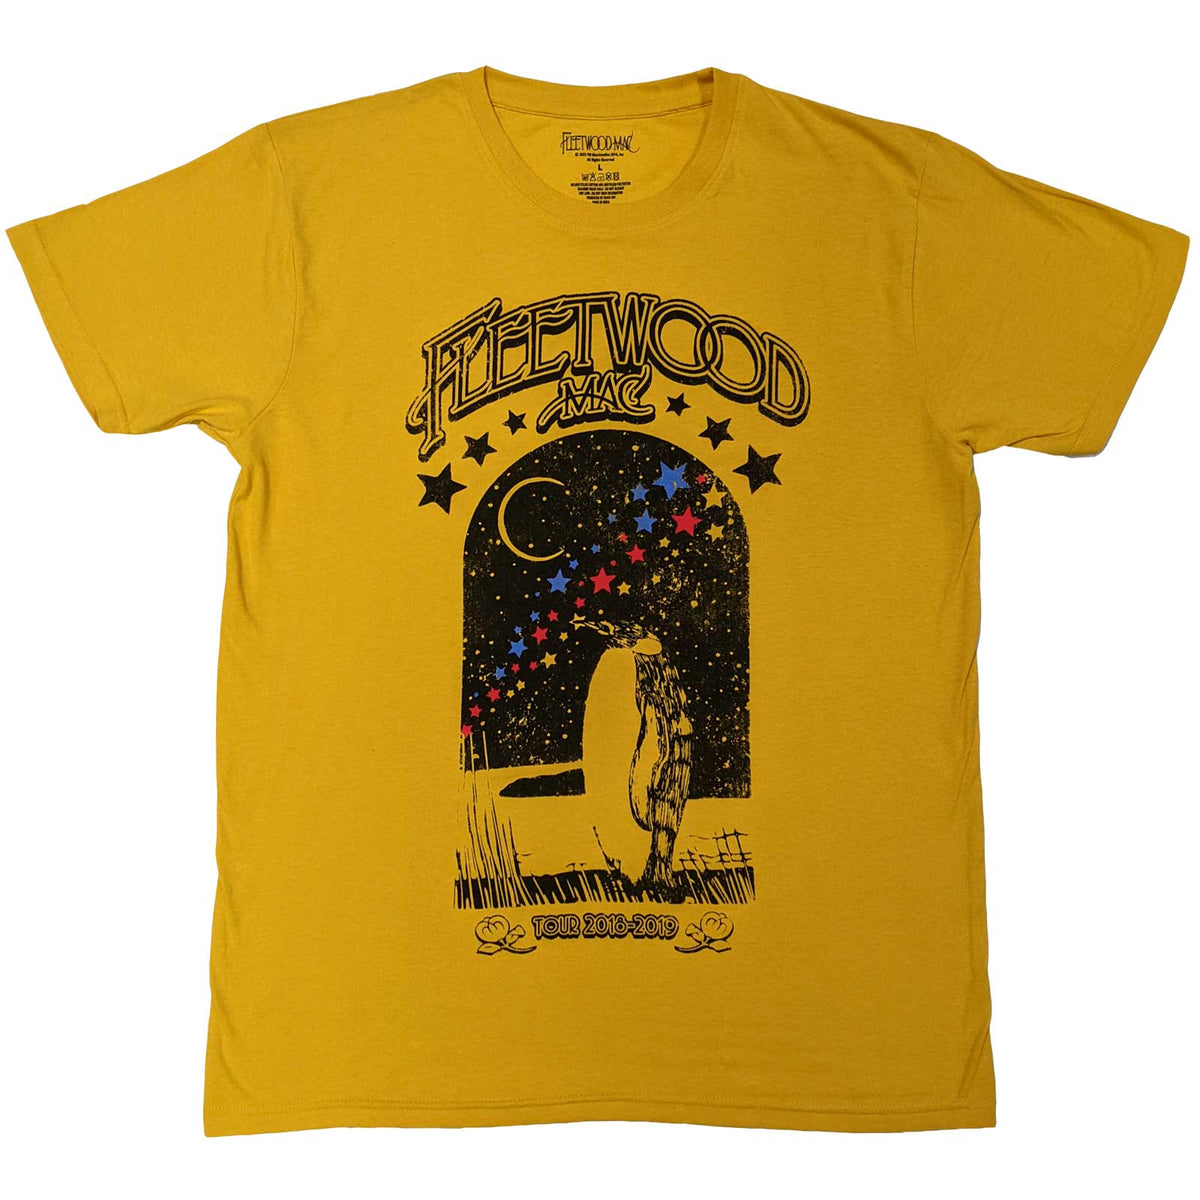 Fleetwood Mac Adult T-Shirt - Penguin Tour 2018-2019 - Yellow Official Licensed Design